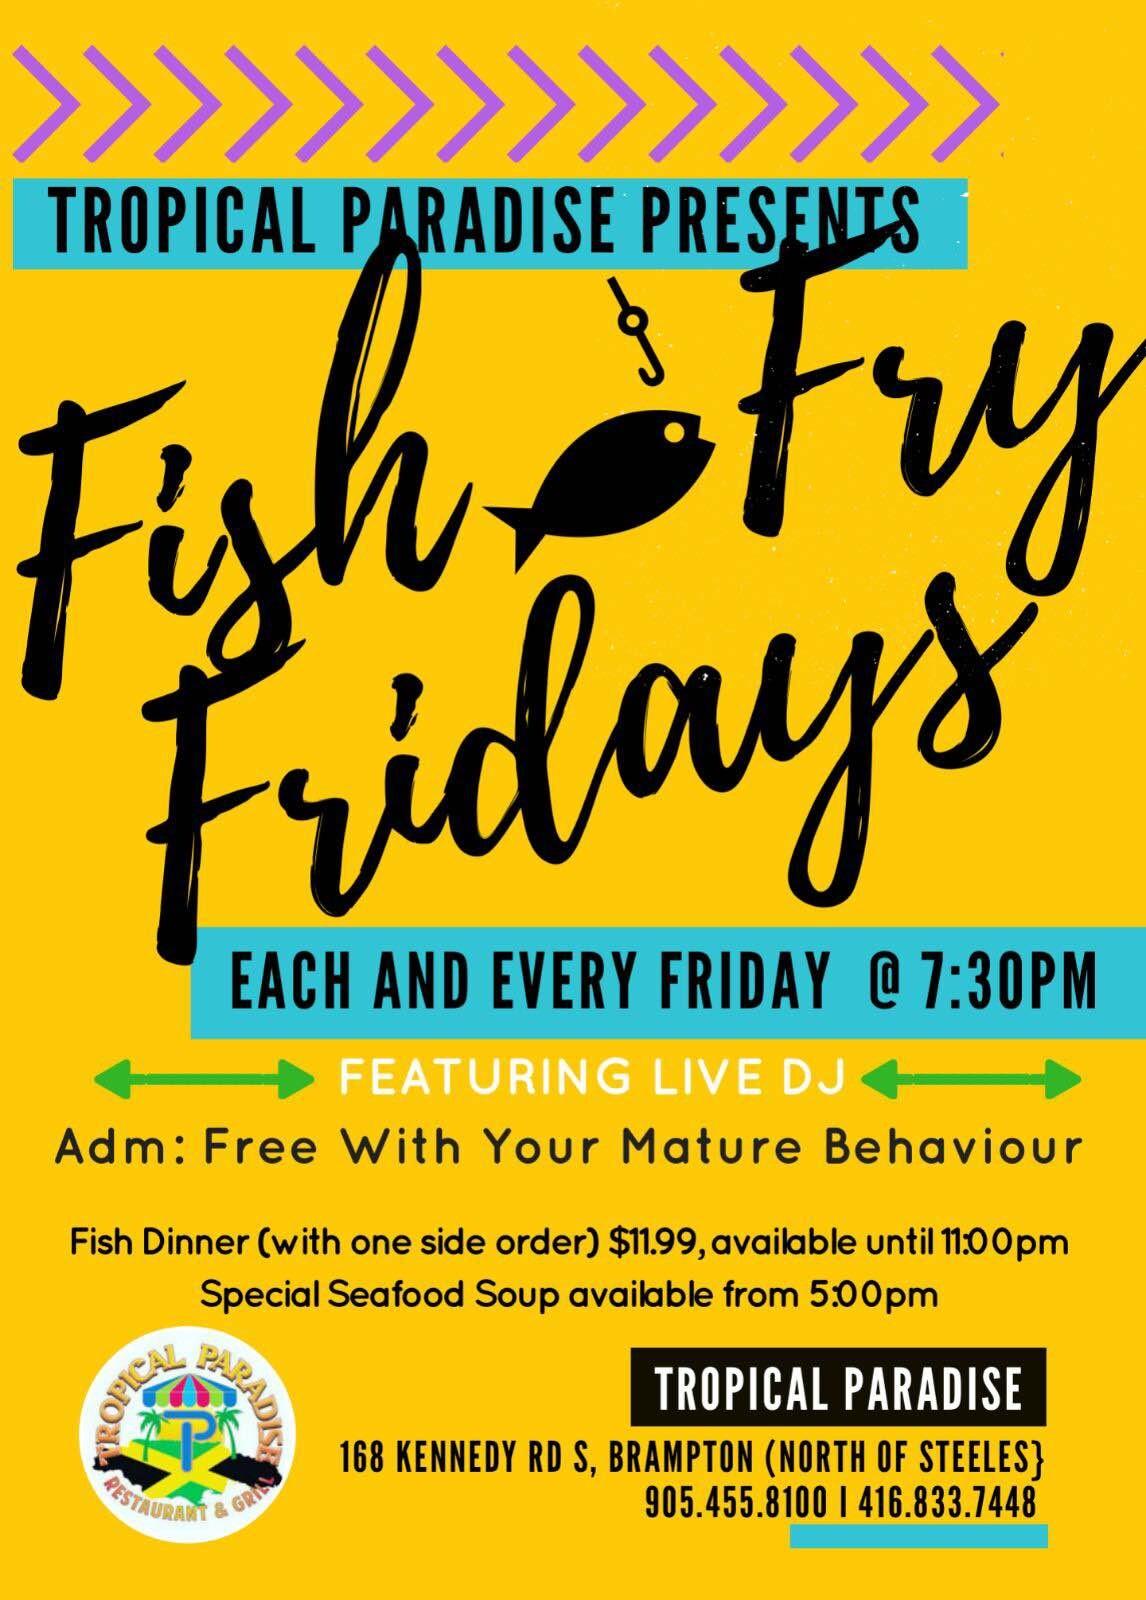 Tropical Paradise Presents Big Friday Fish Fry